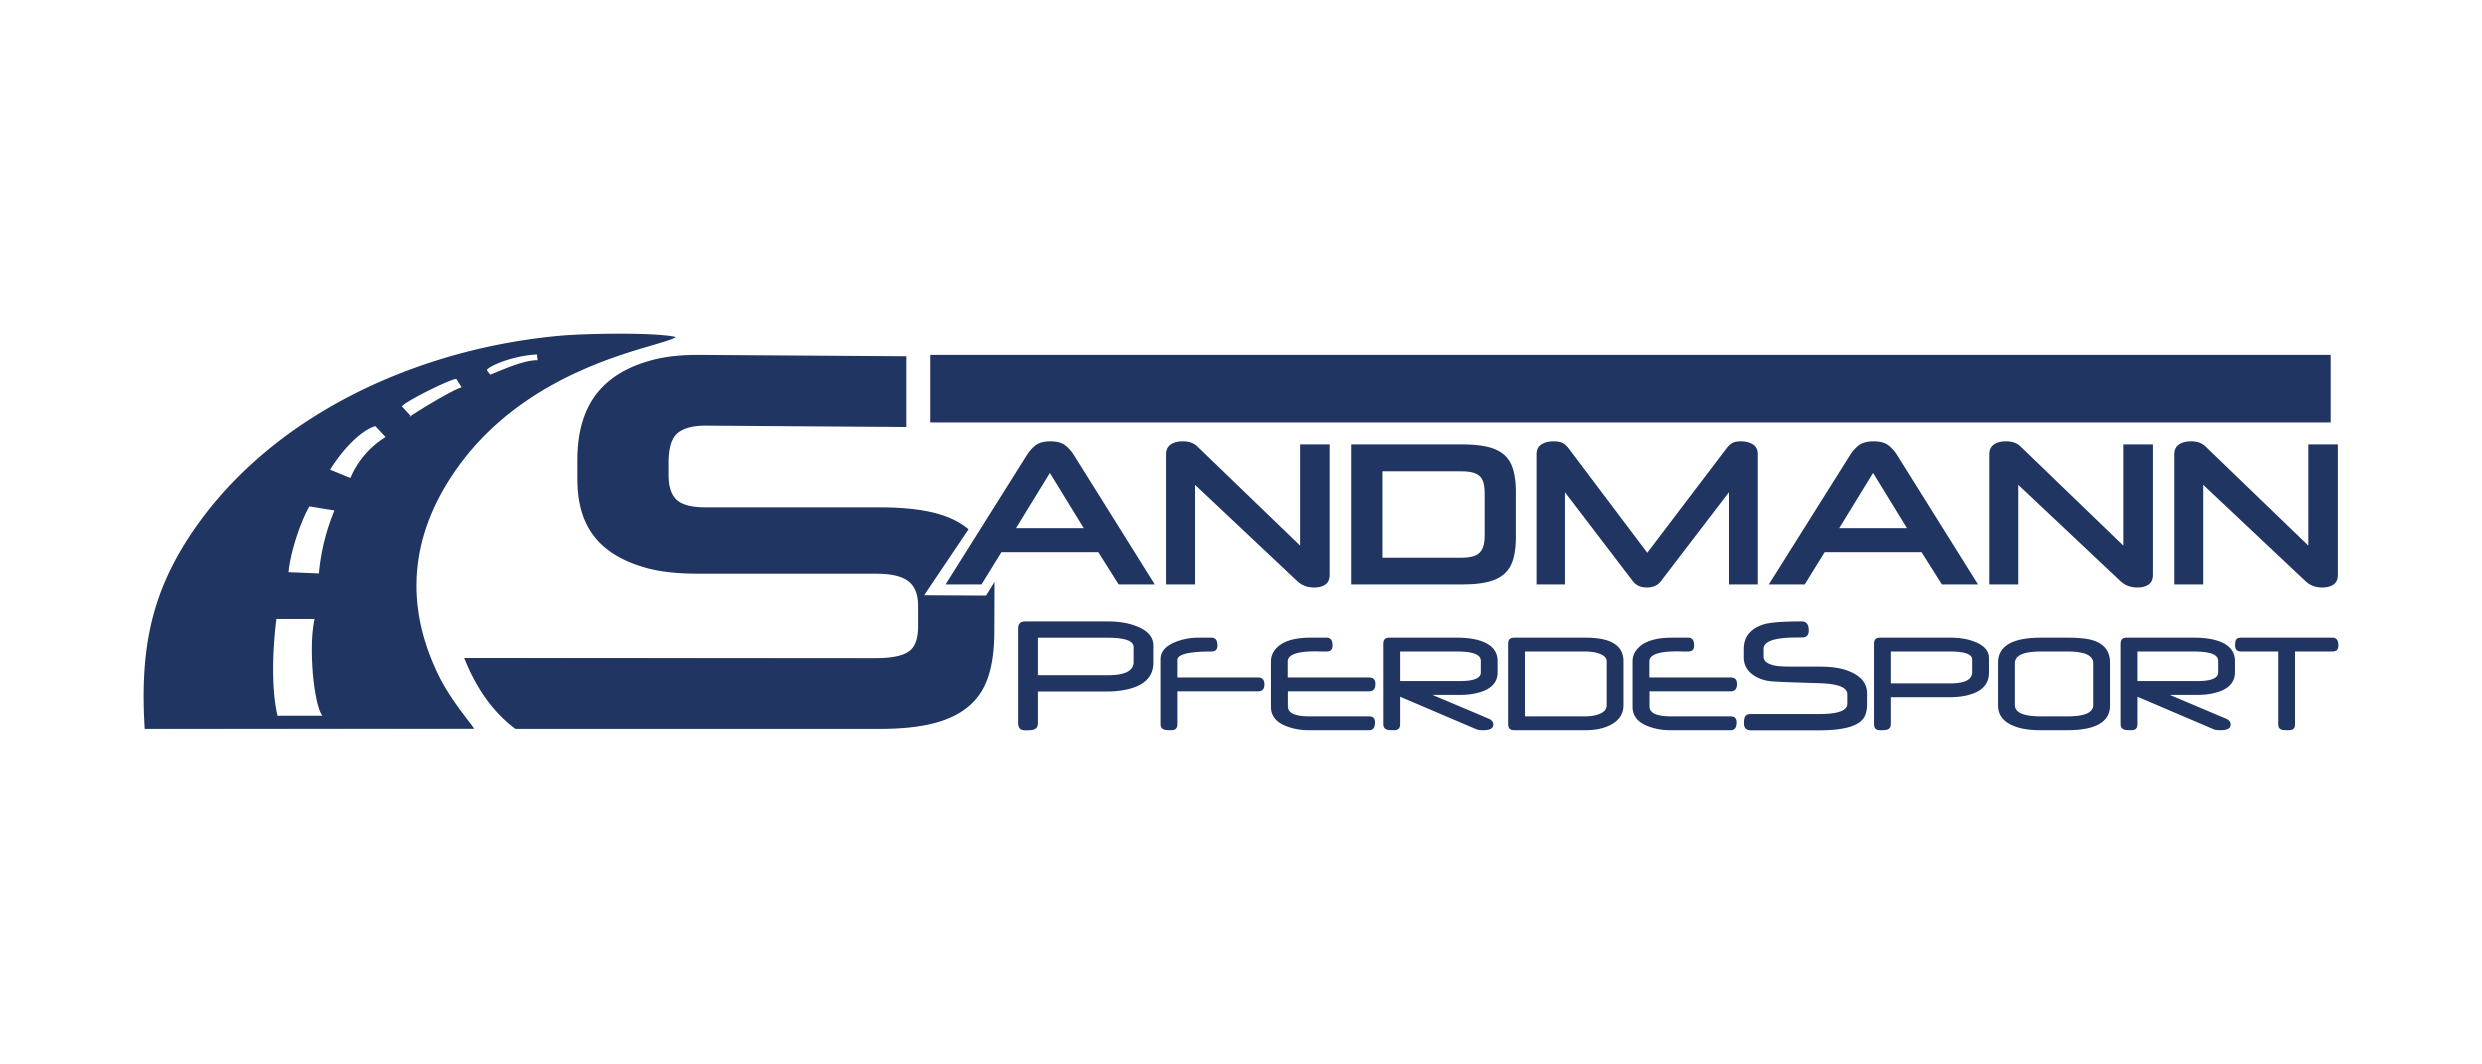 Sandmann Pferdesport